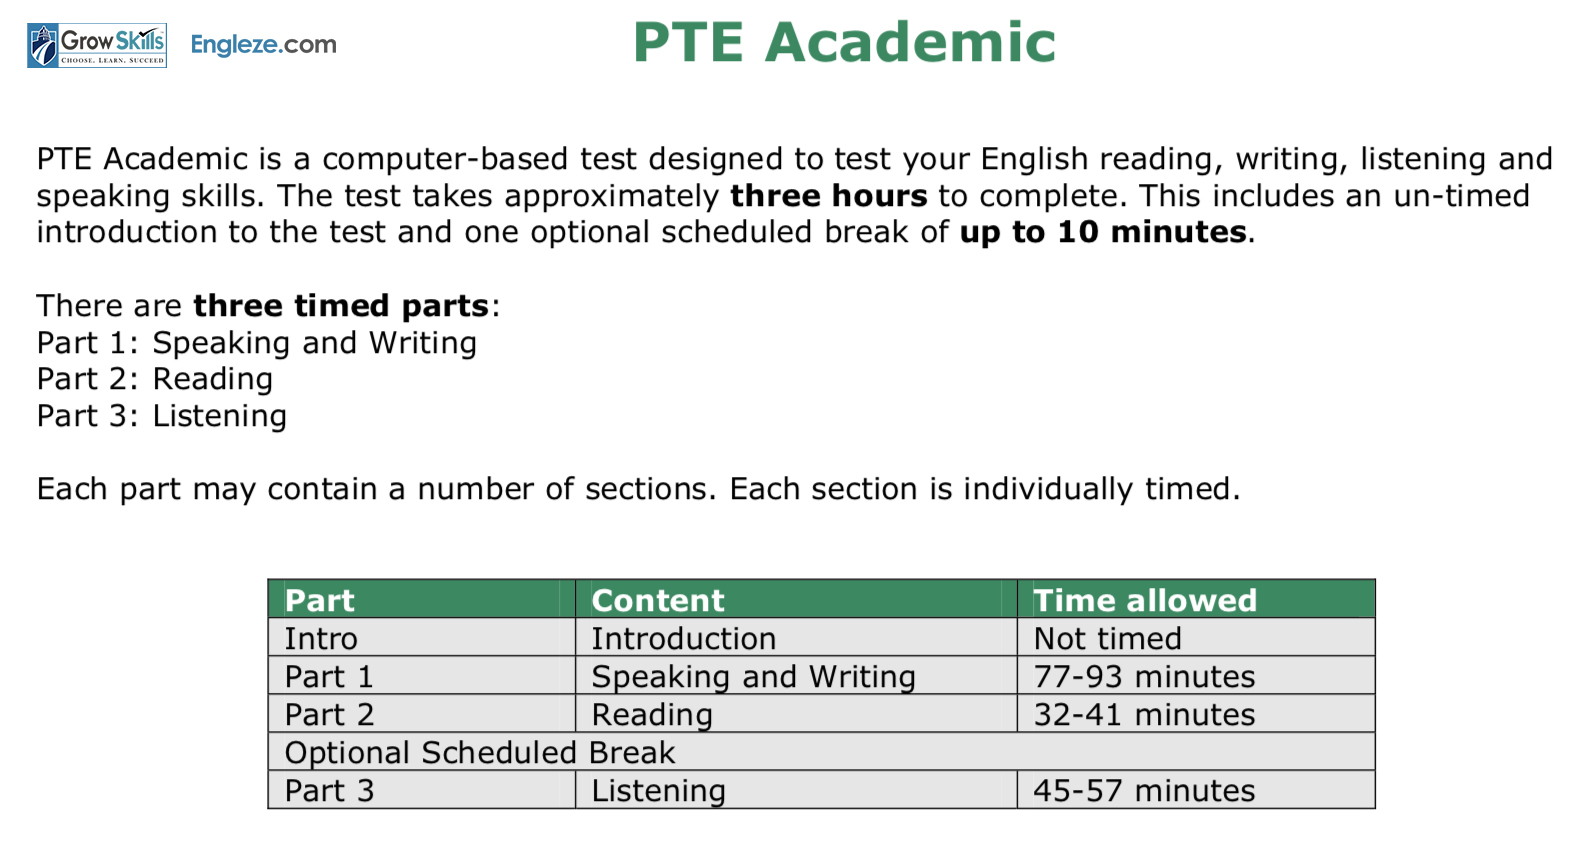 PTE-Academic-Overview-GrowSkills-Engleze.com-